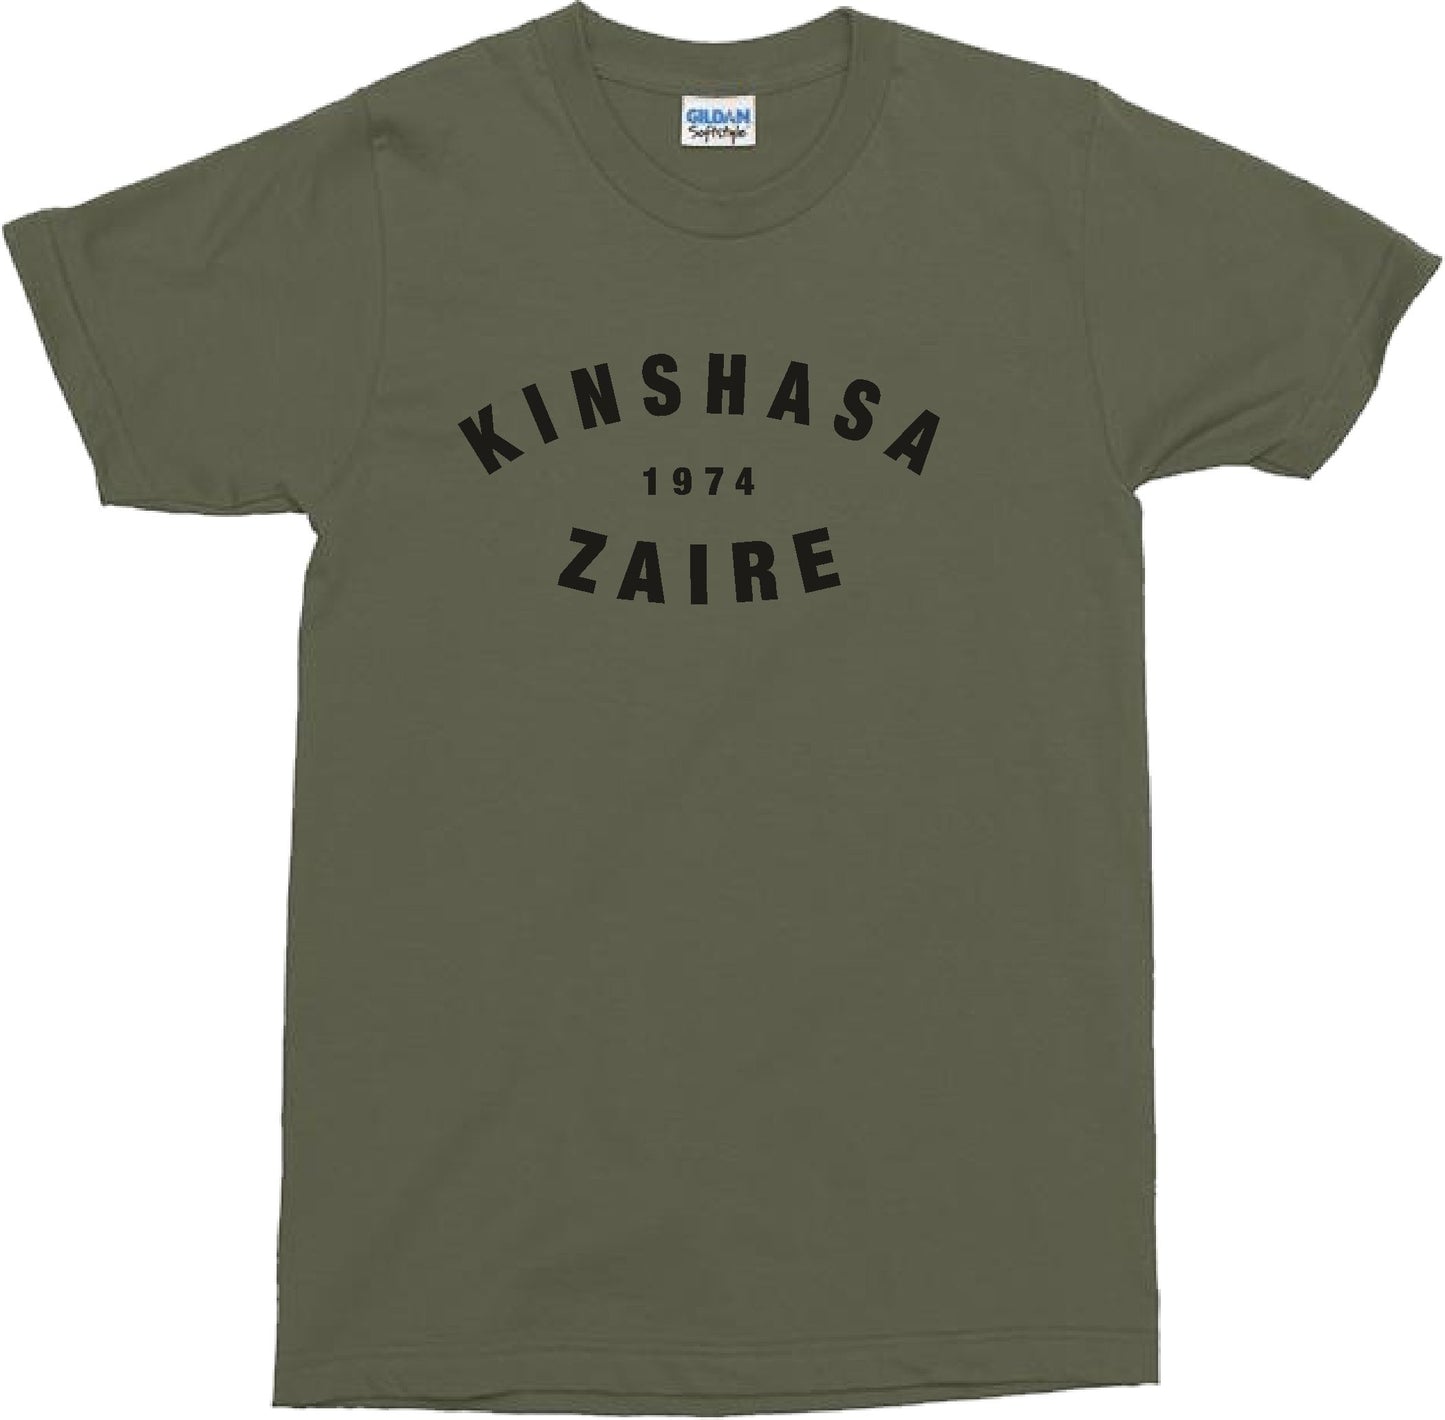 Kinshasa Zaire 1974 T-Shirt - Retro Boxing, 70s, Various Colours